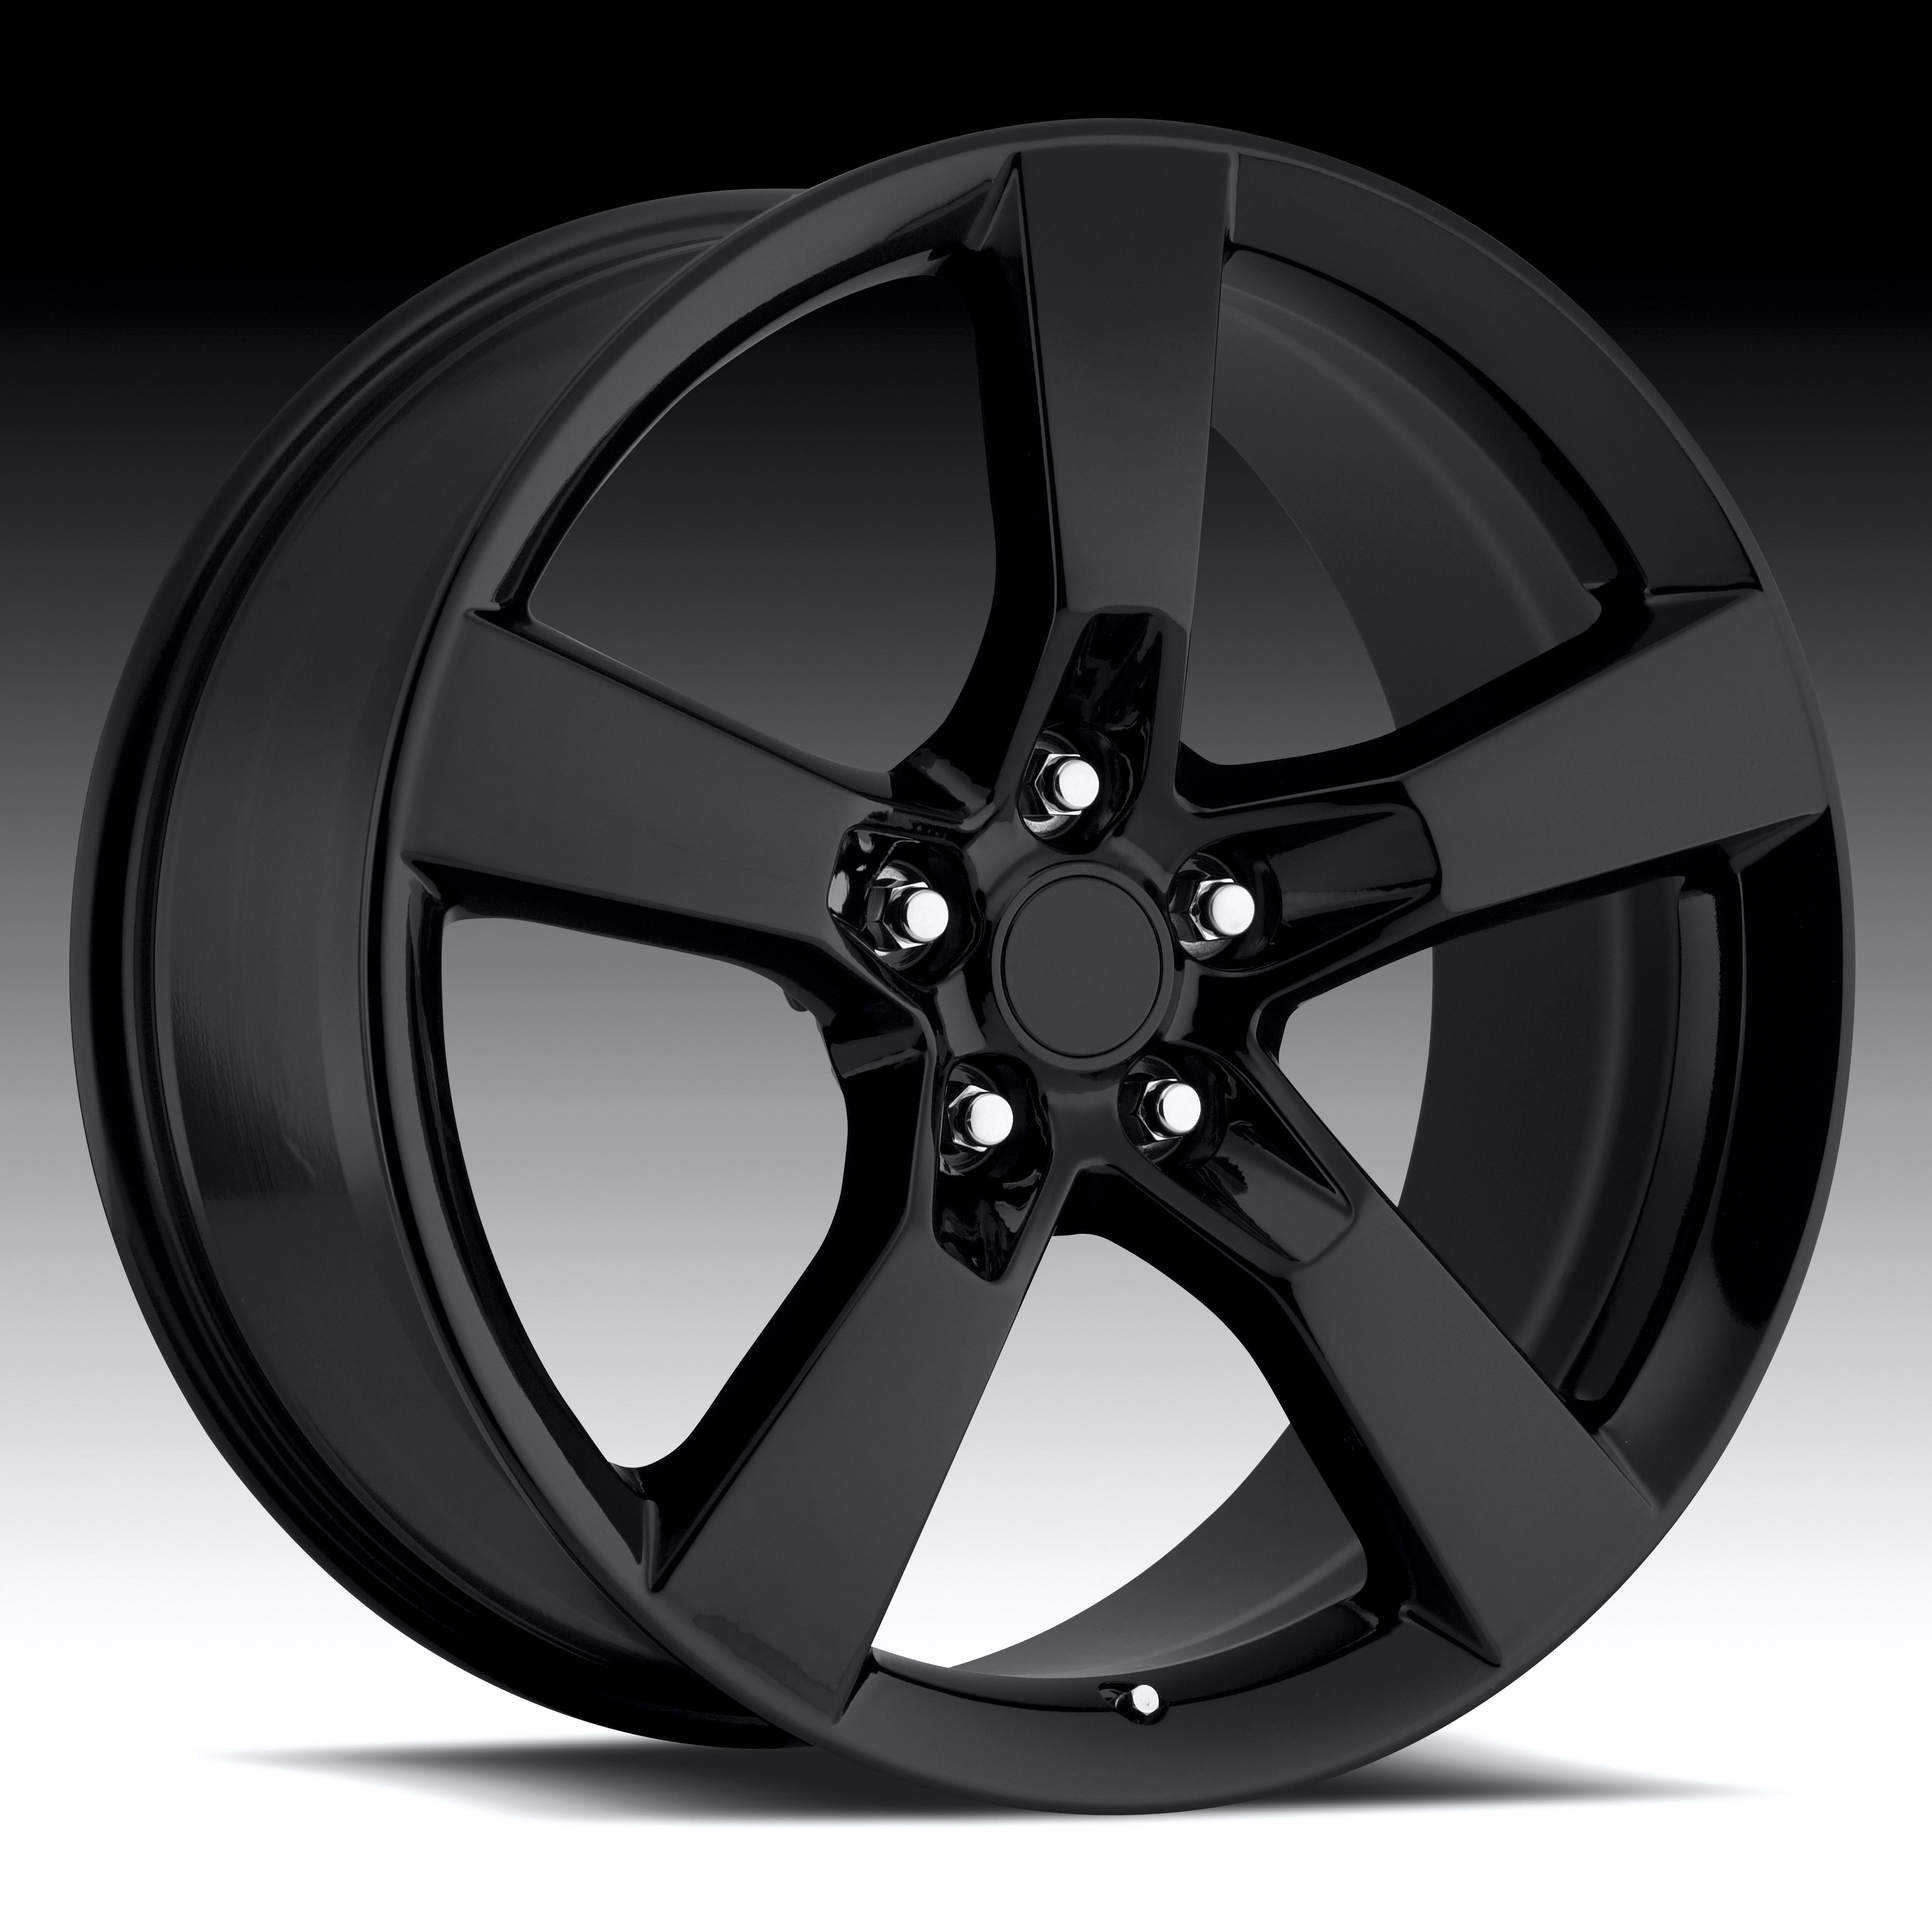 2010-2015 Camaro 20" Wheel Package : Reproduction Gloss Black